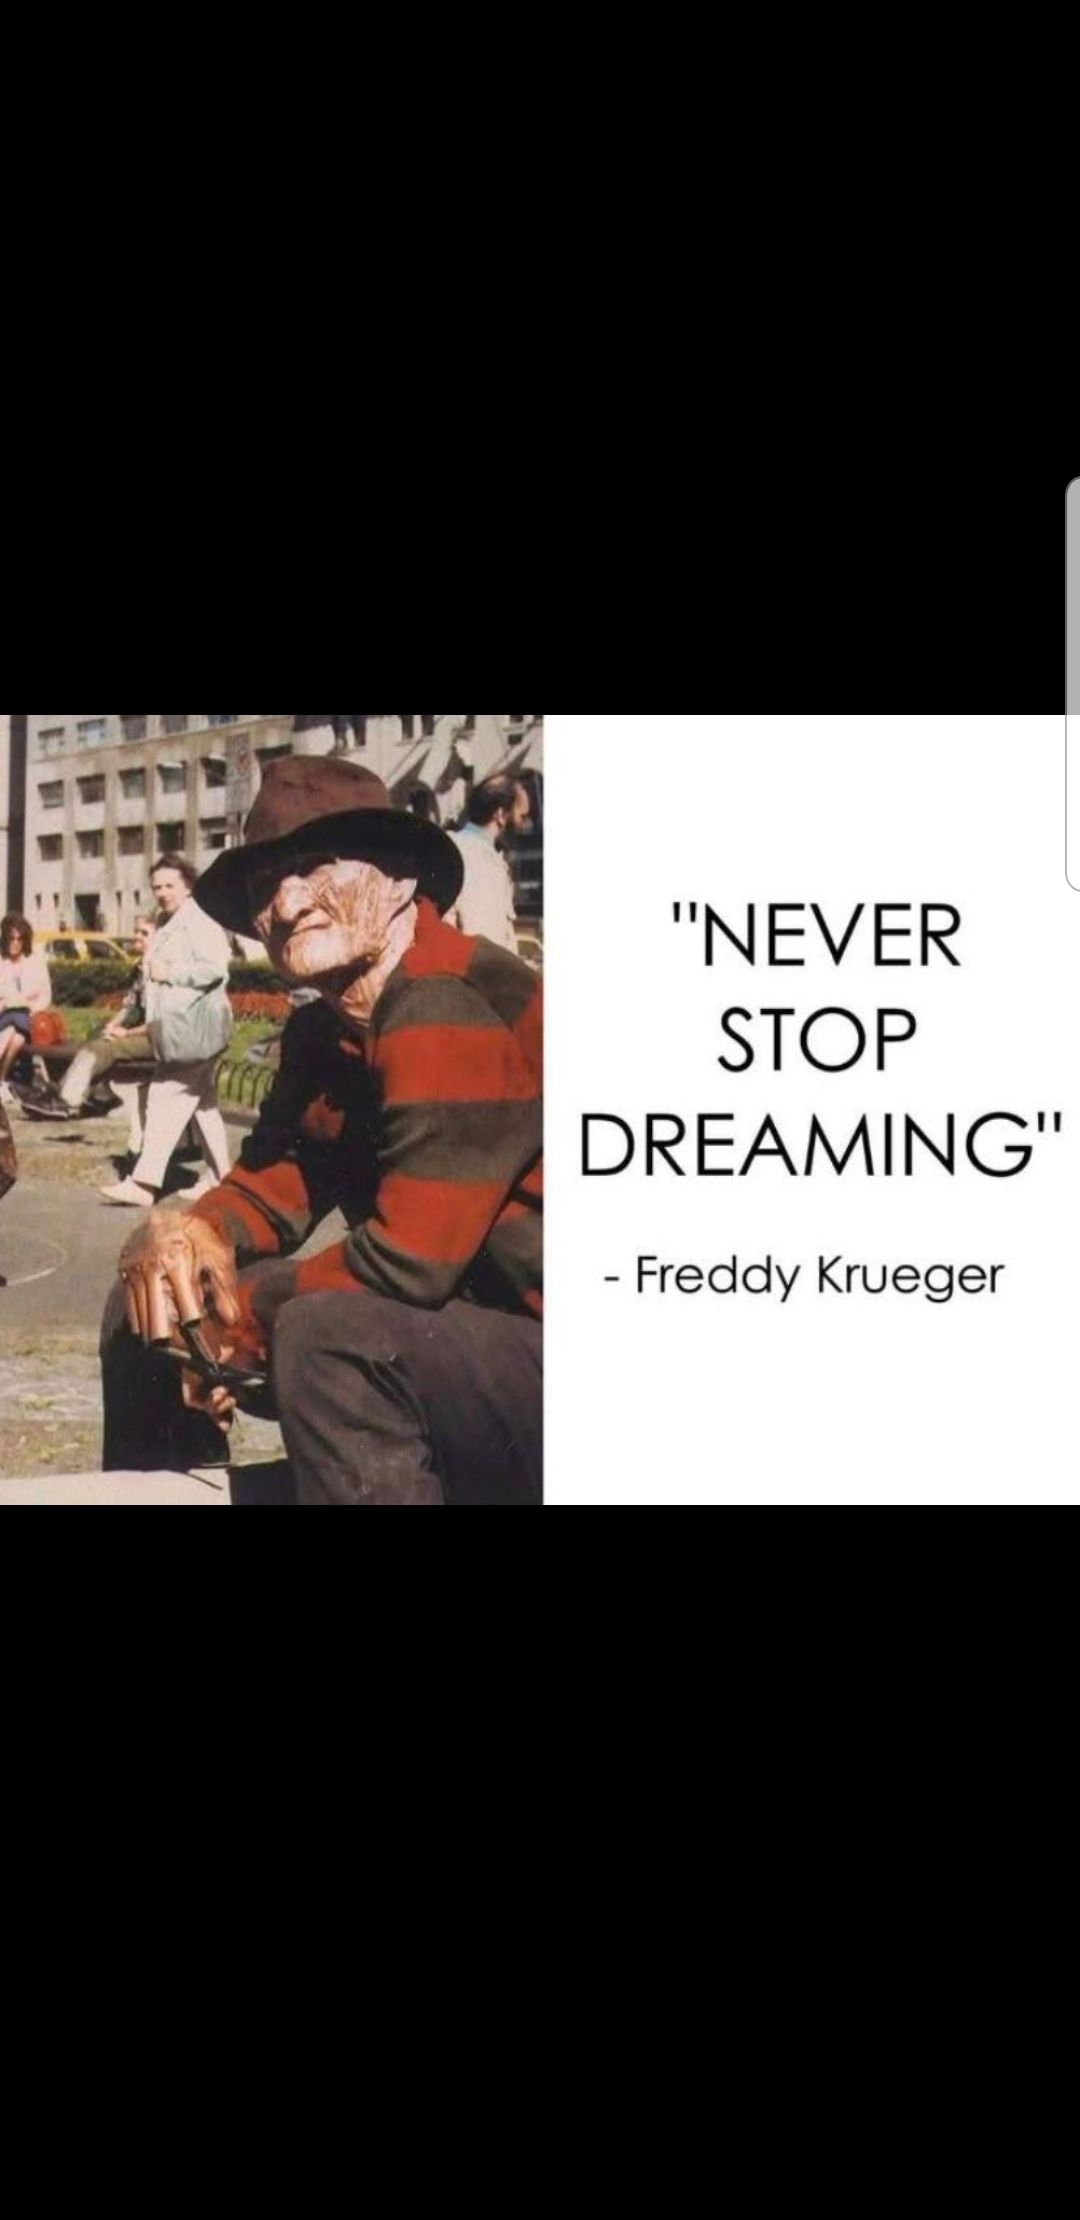 Keep on dreaming kids